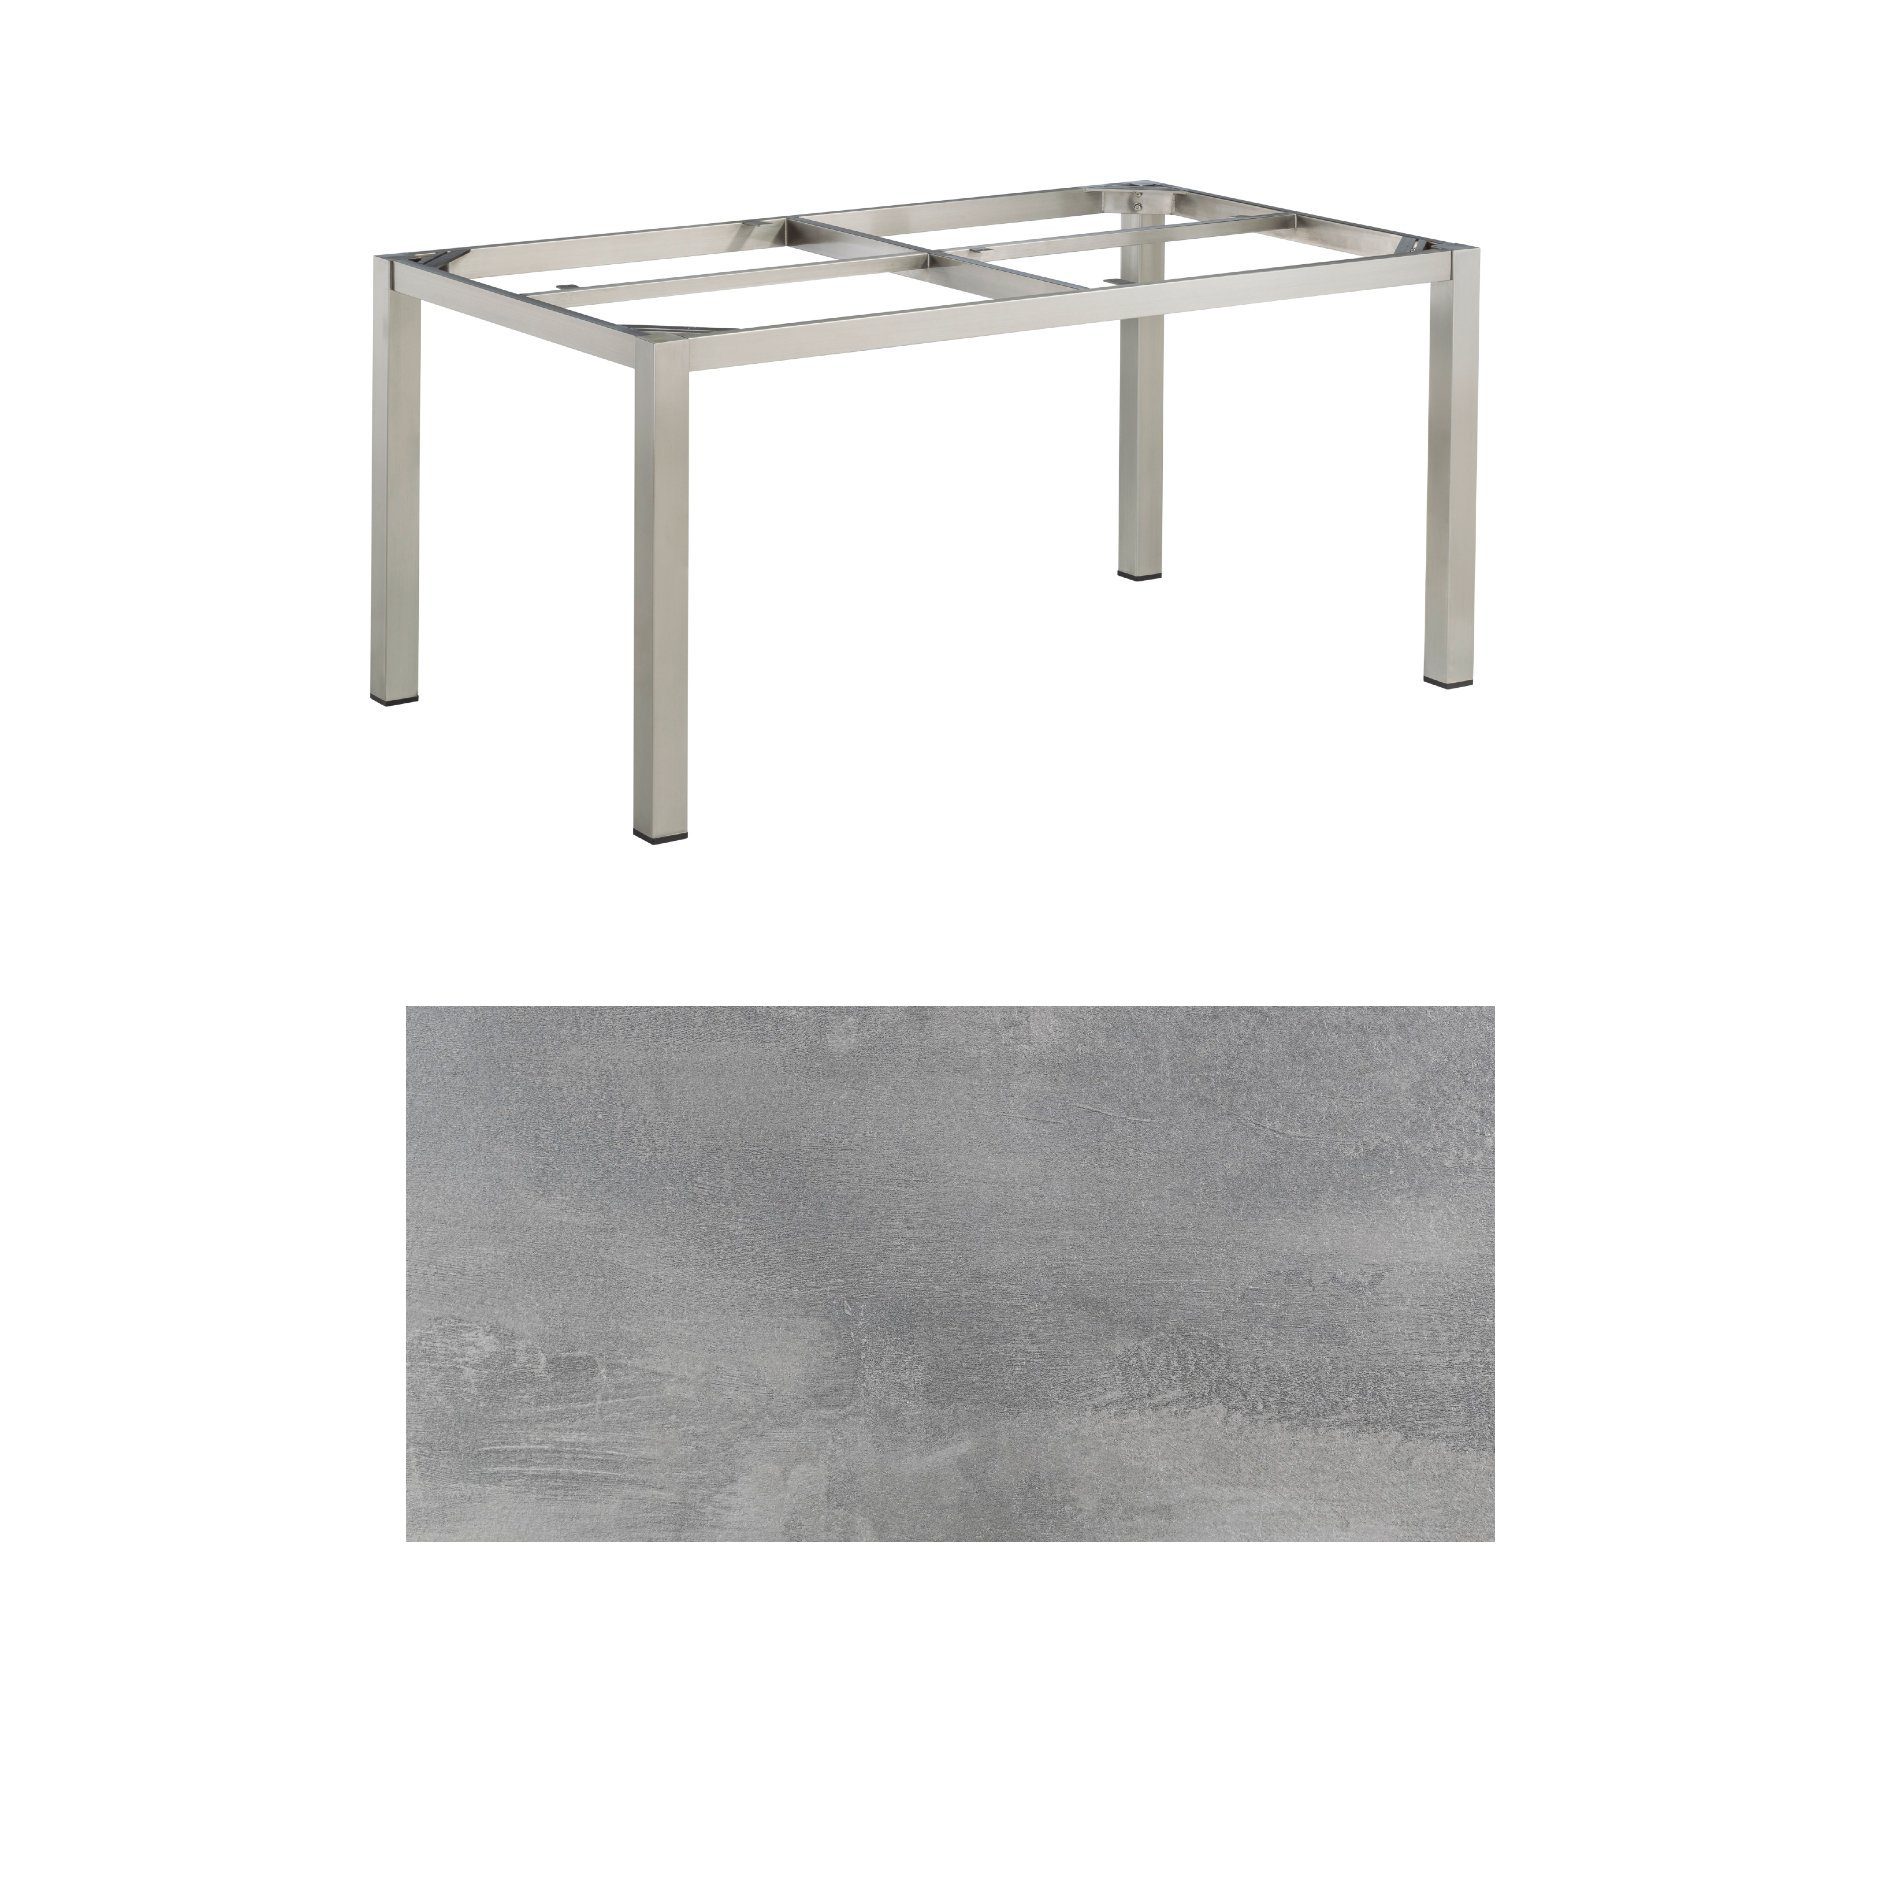 Kettler Gartentisch, Tischgestell 160x95cm "Cubic", Edelstahl, mit Tischplatte HPL silber-grau